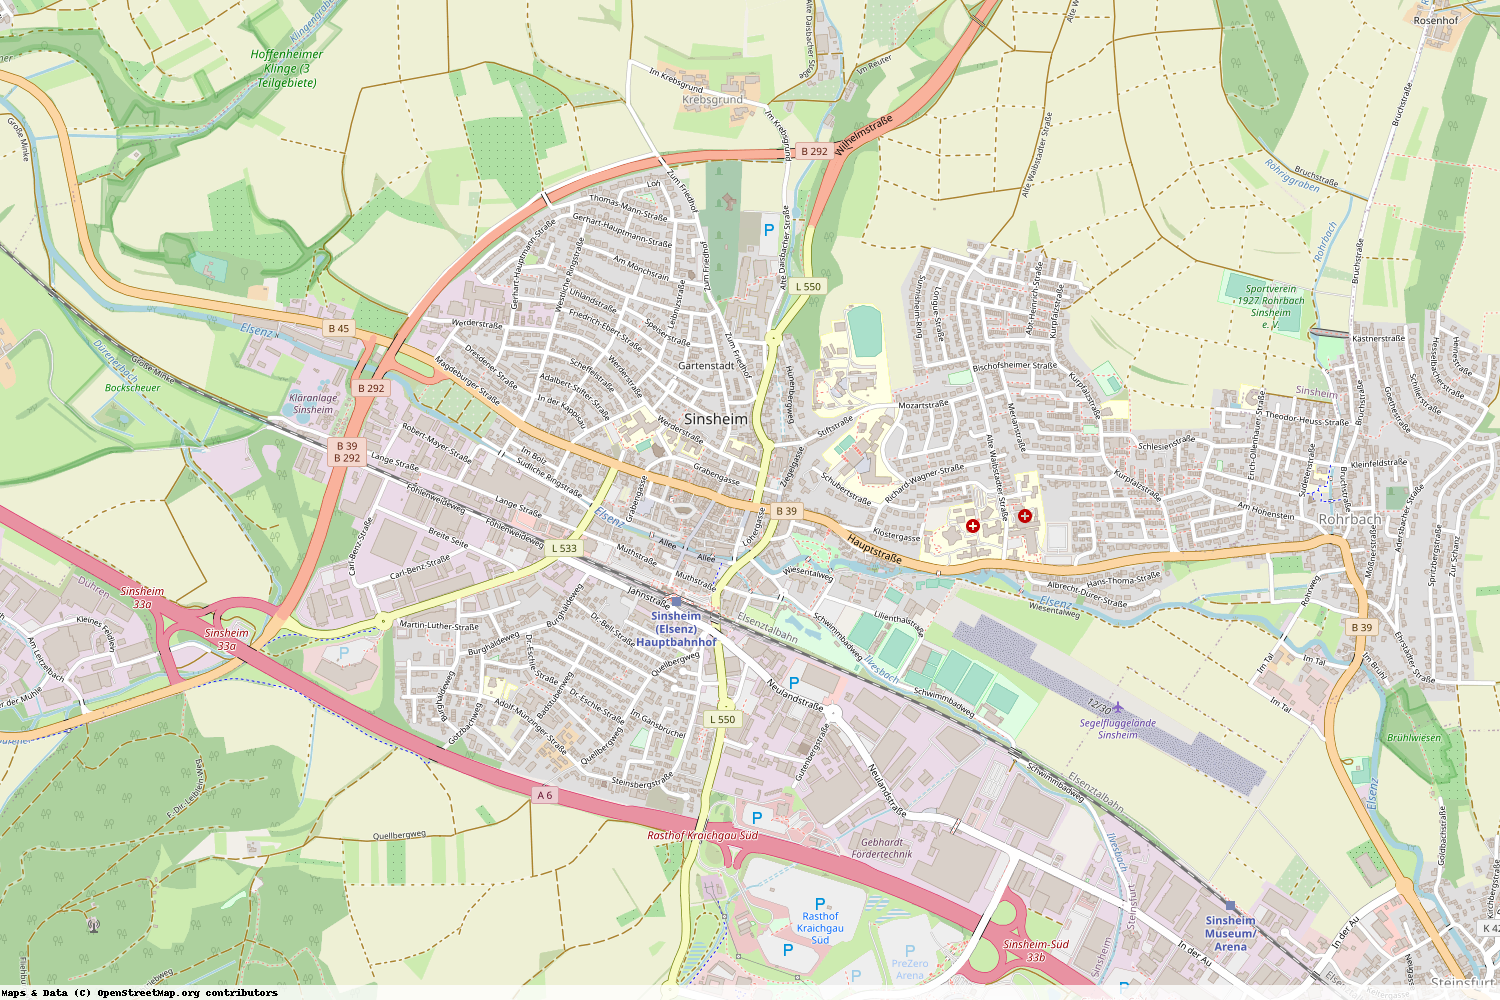 Ist gerade Stromausfall in Baden-Württemberg - Rhein-Neckar-Kreis - Sinsheim?